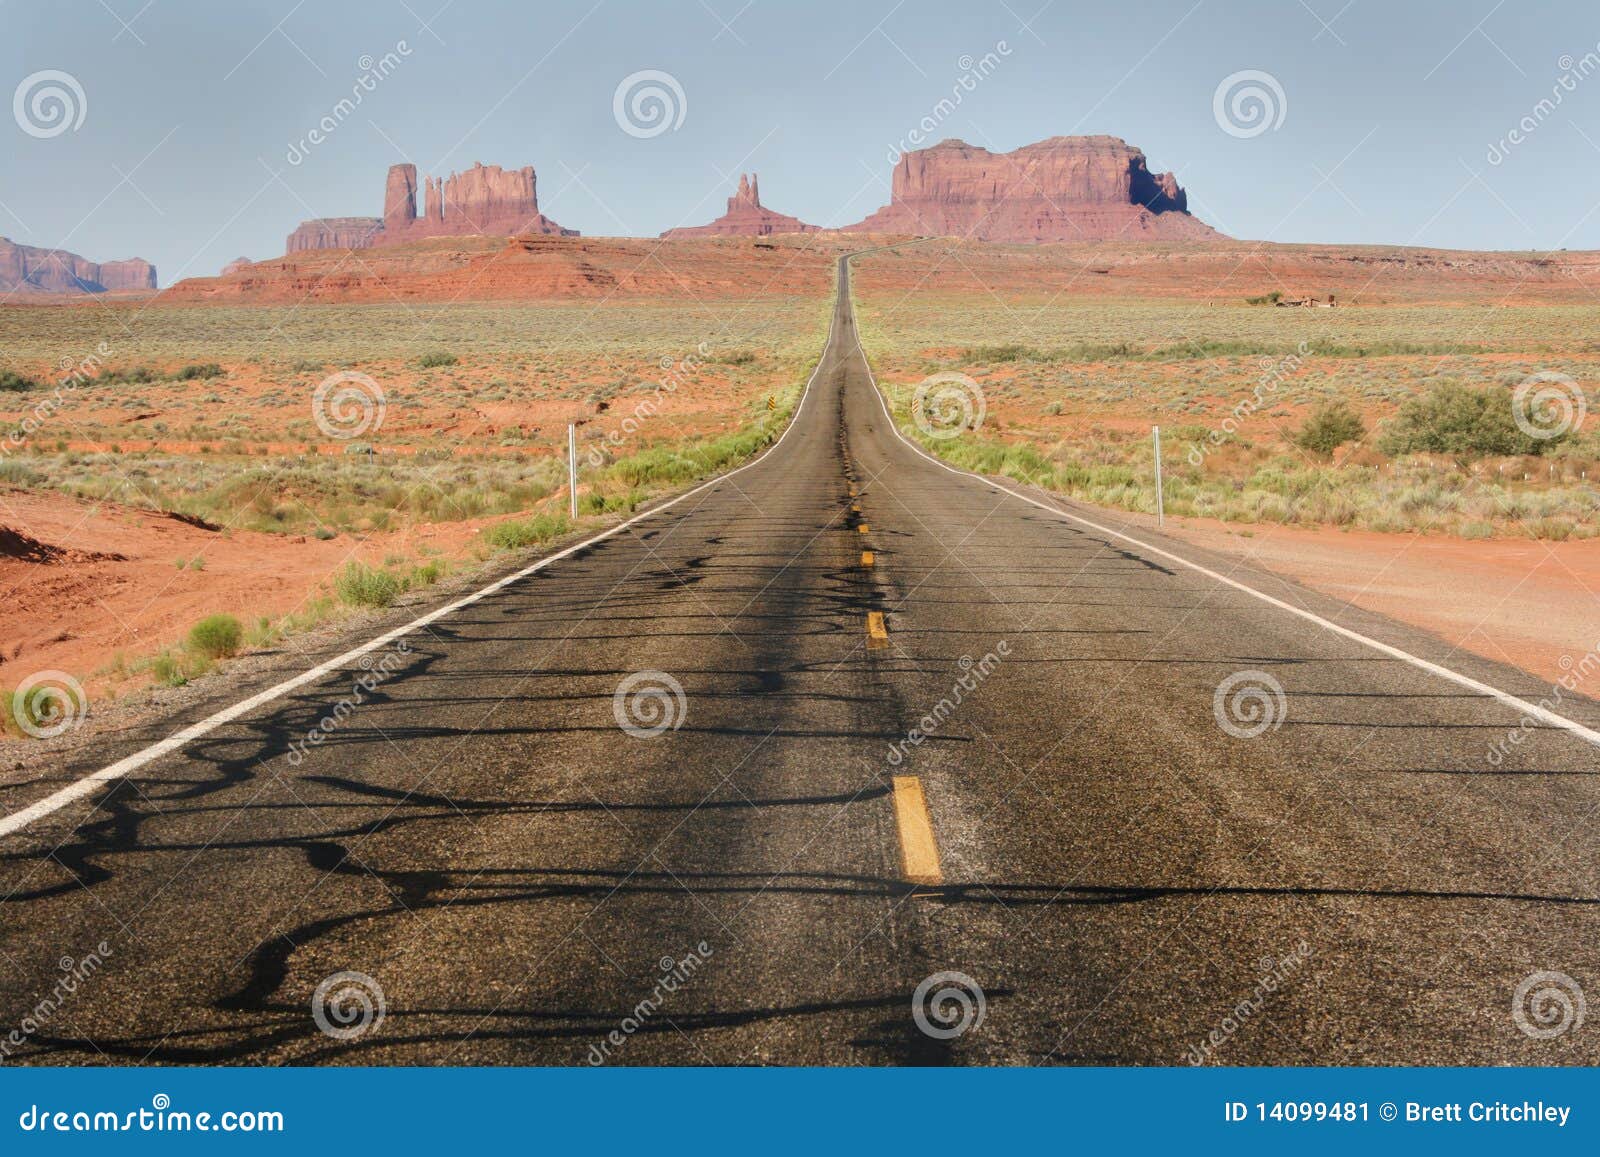 straight desert highway road